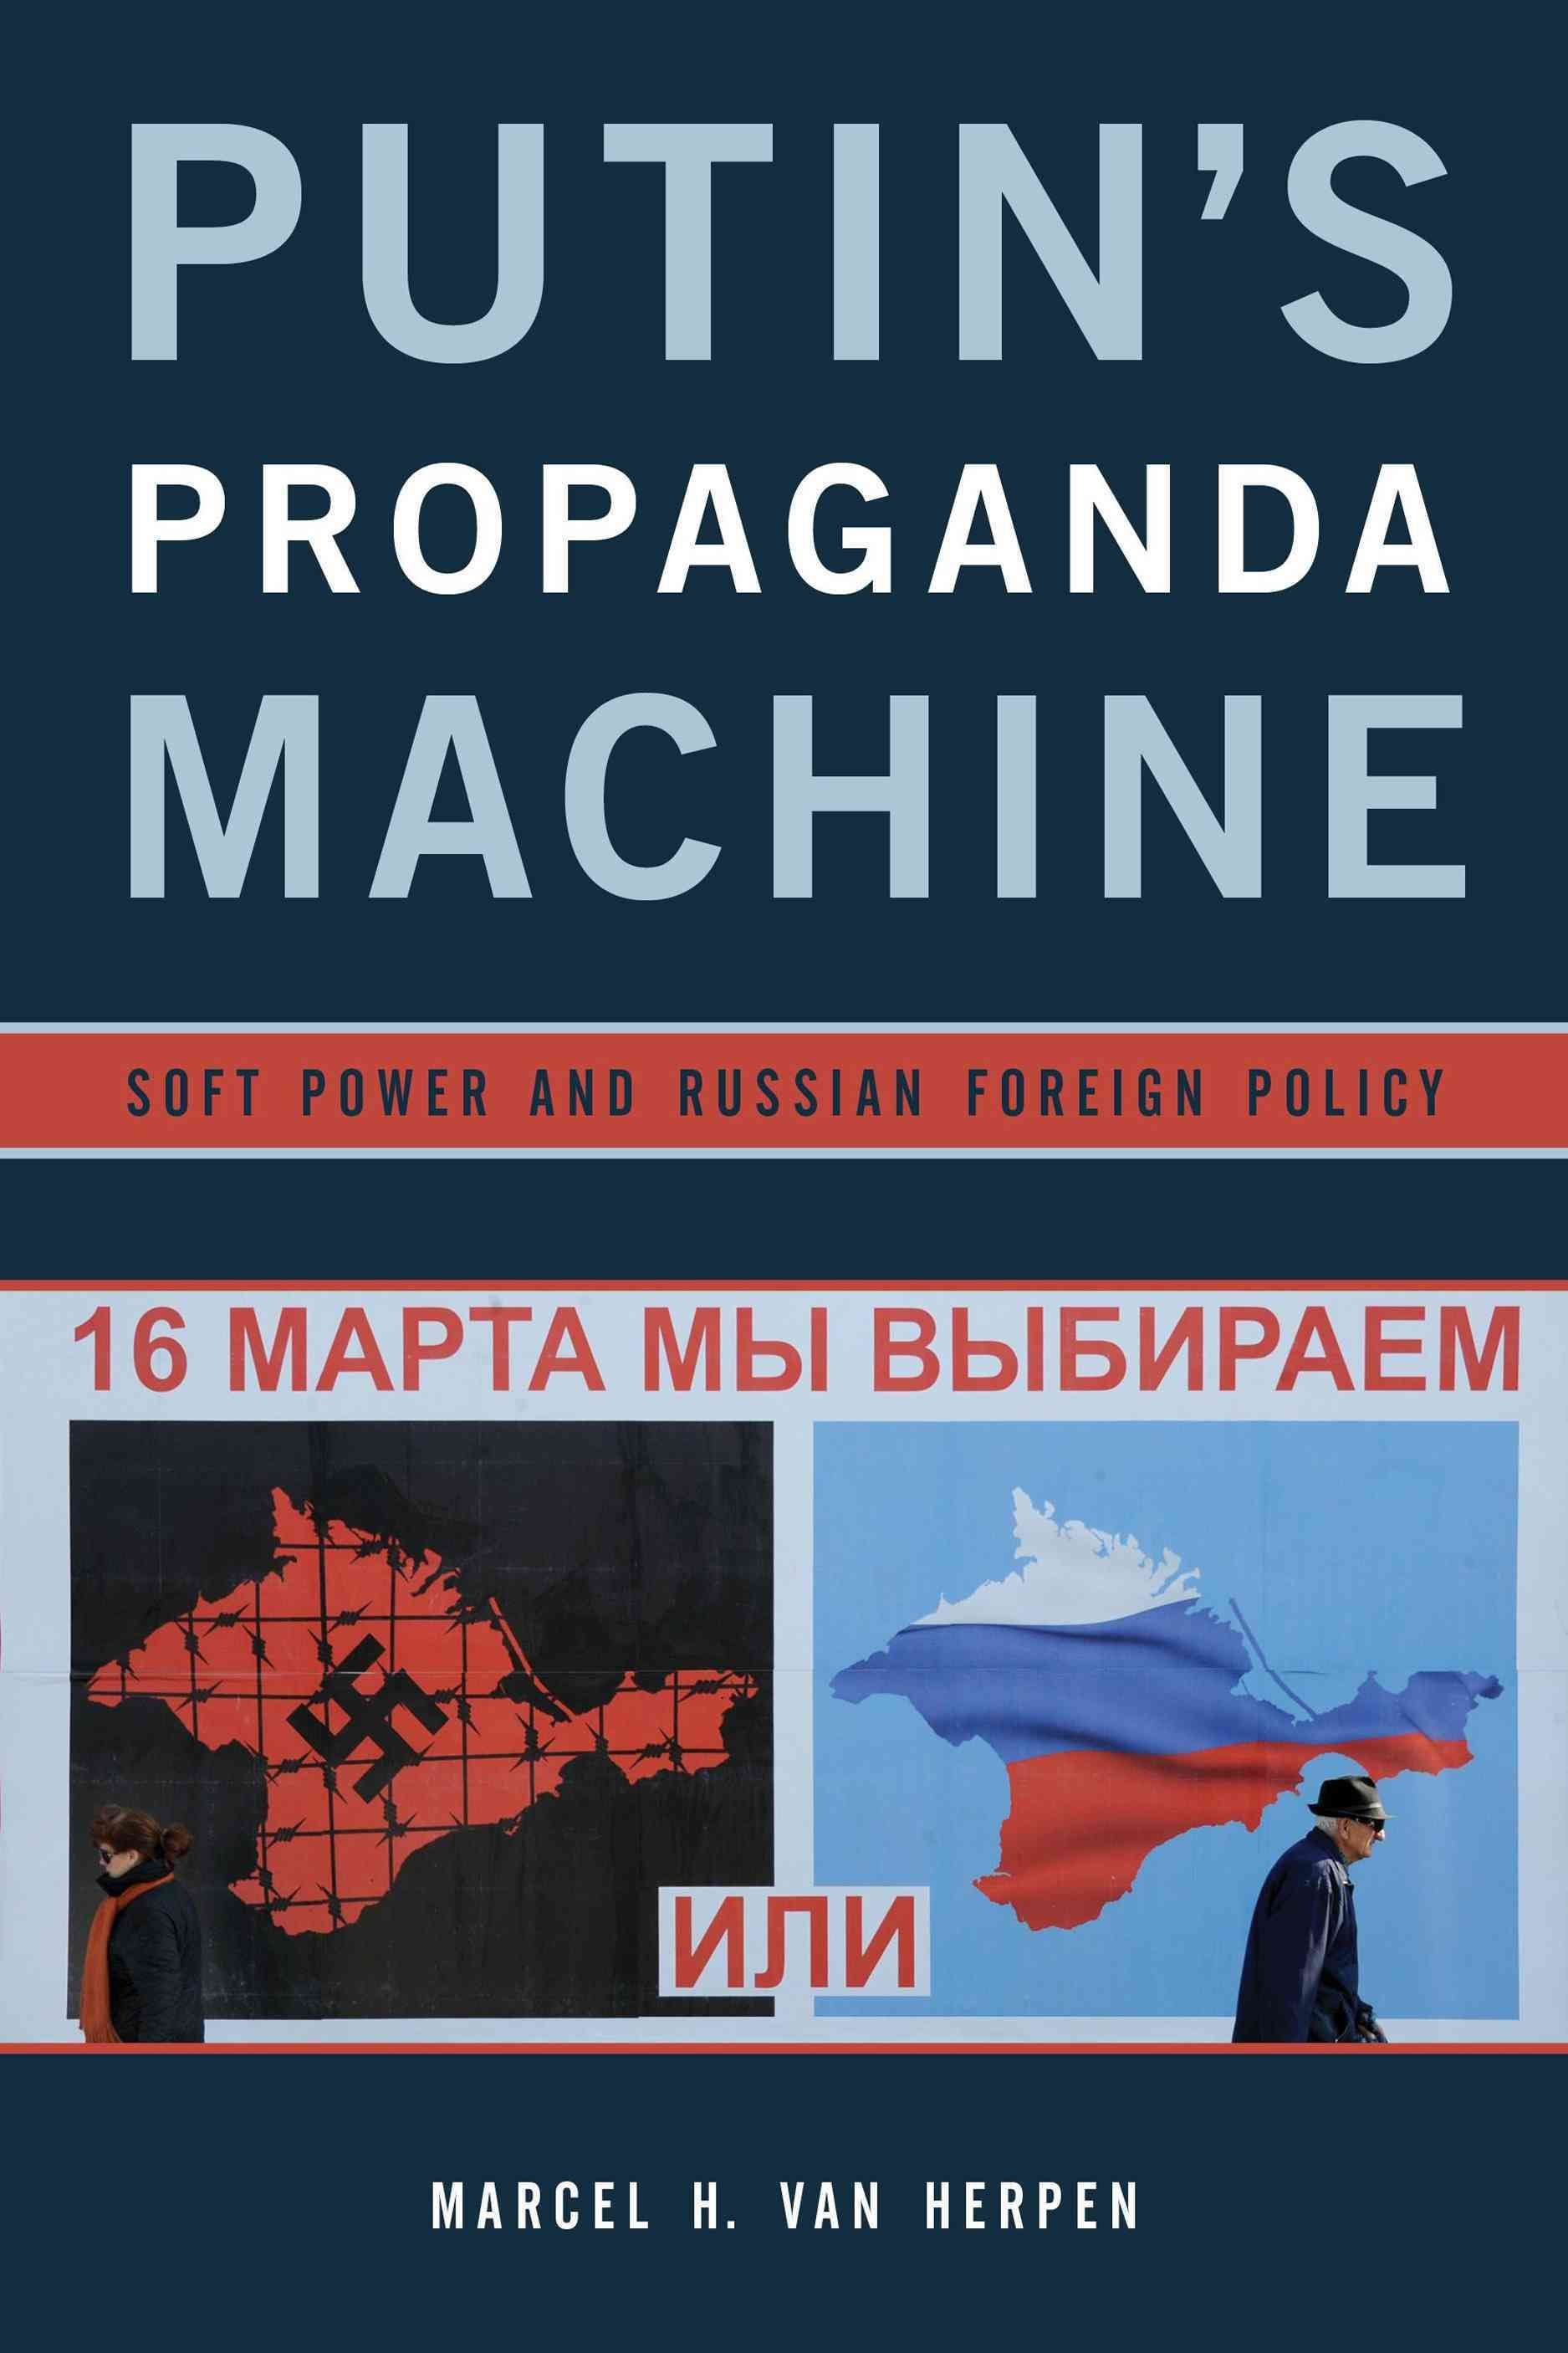 Putin's Propaganda Machine